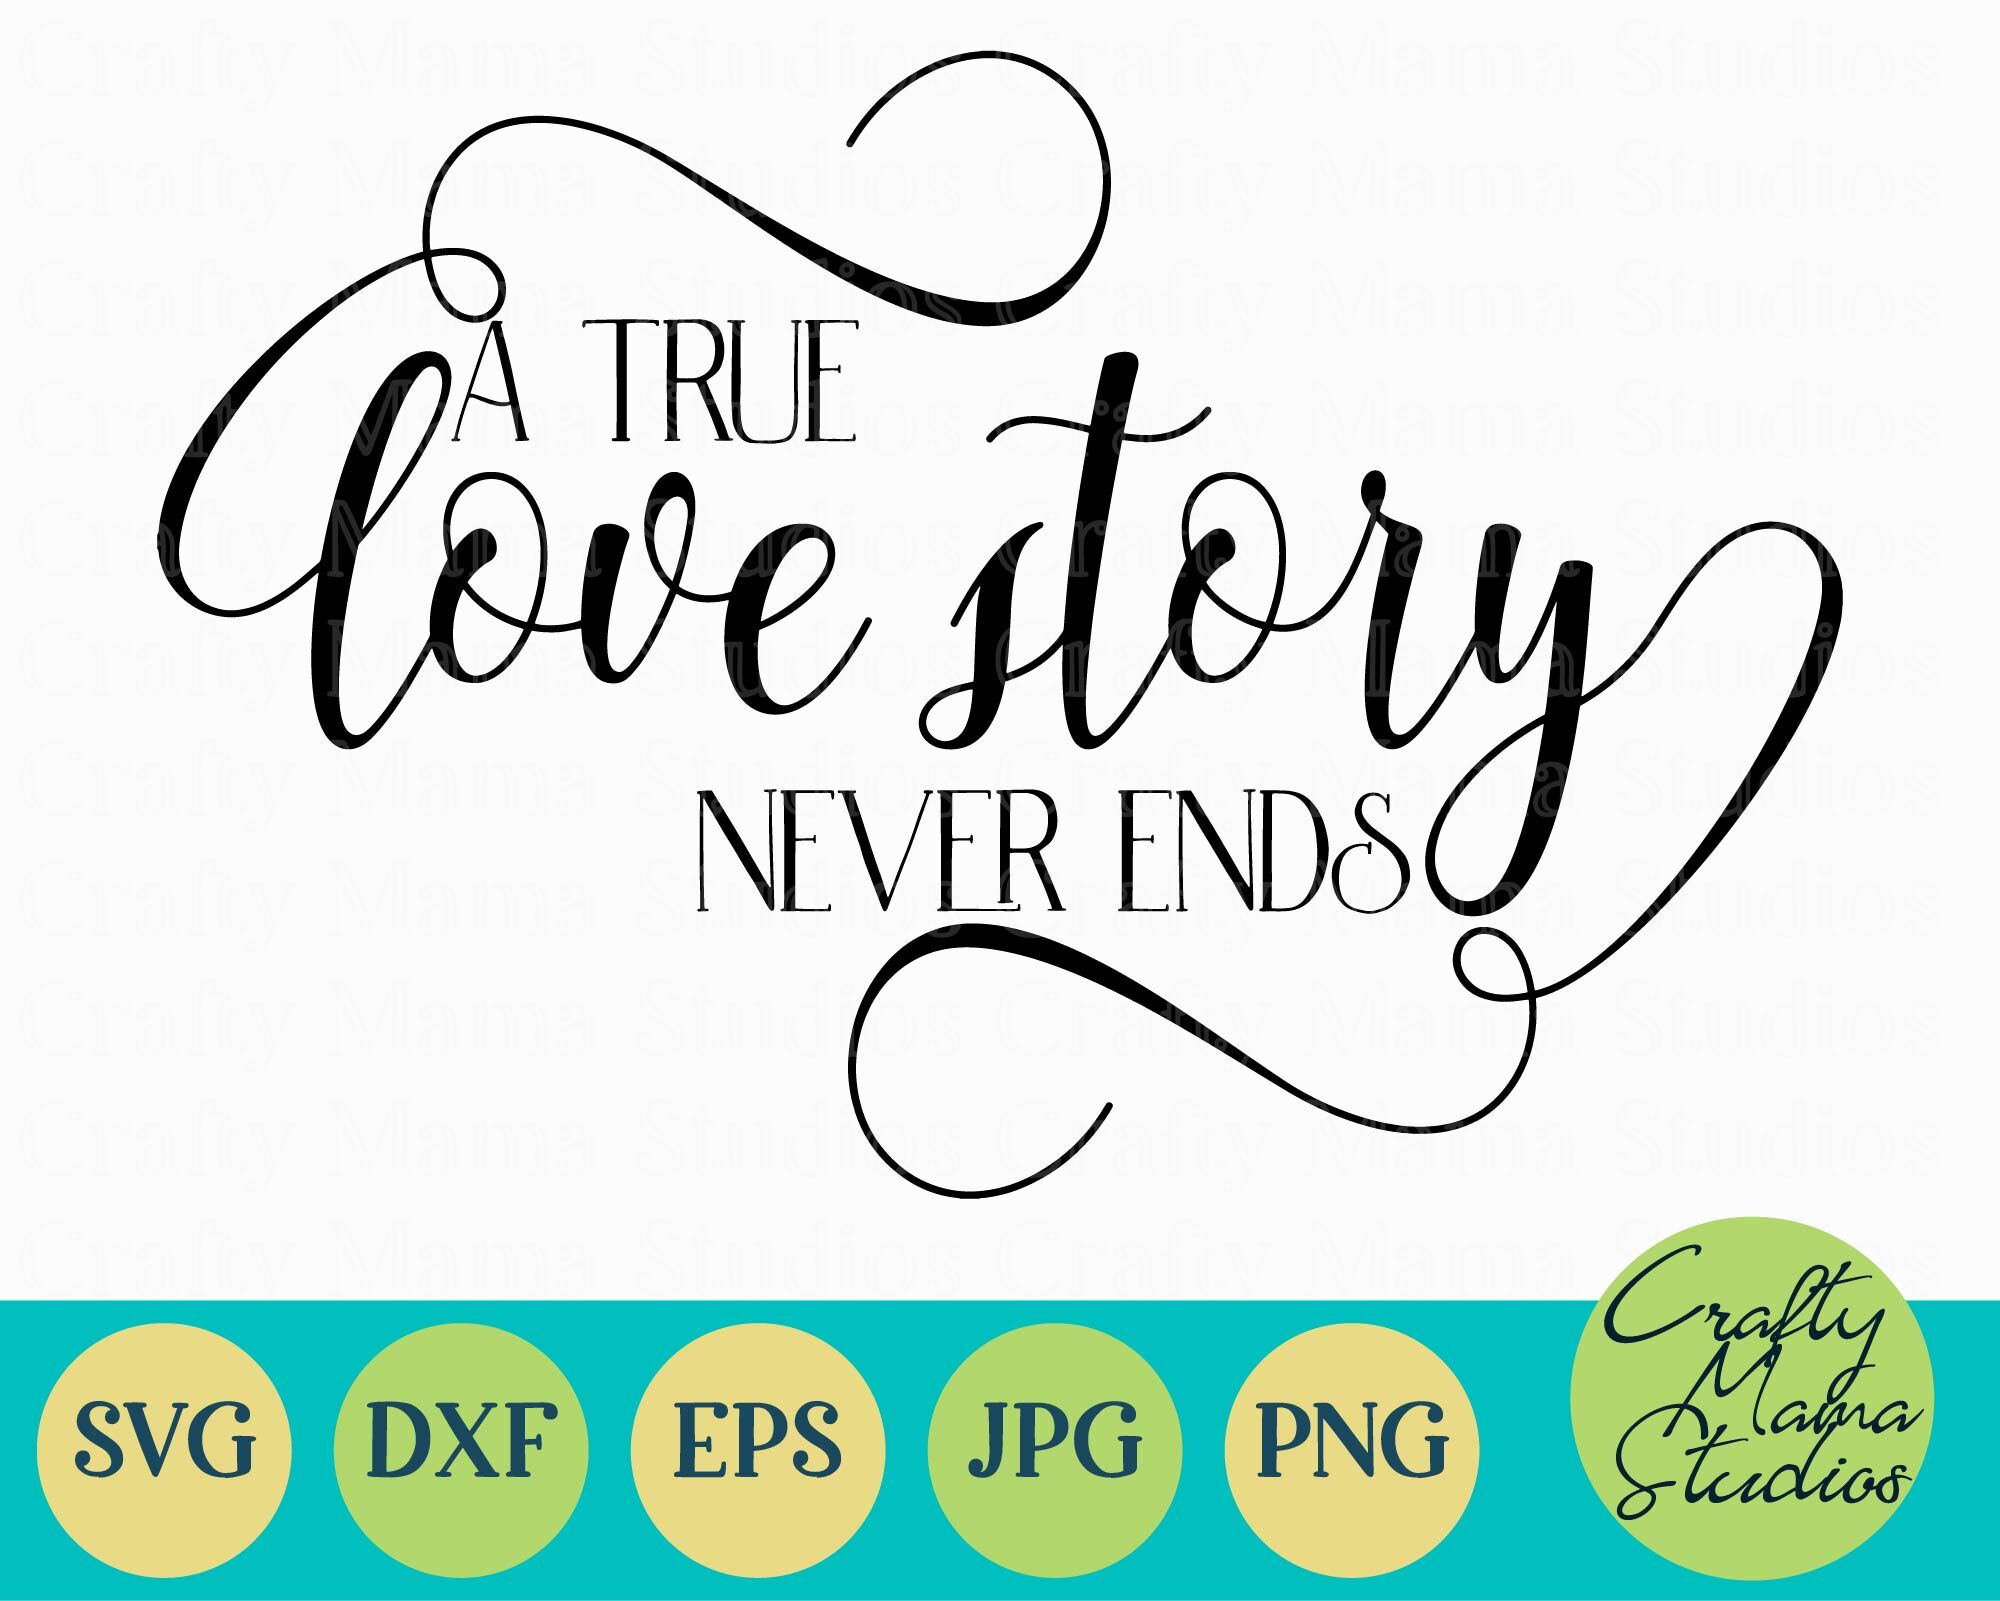 A True Love Story Never Ends Svg Love Svg Mr And Mrs Svg By Crafty Mama Studios Thehungryjpeg Com